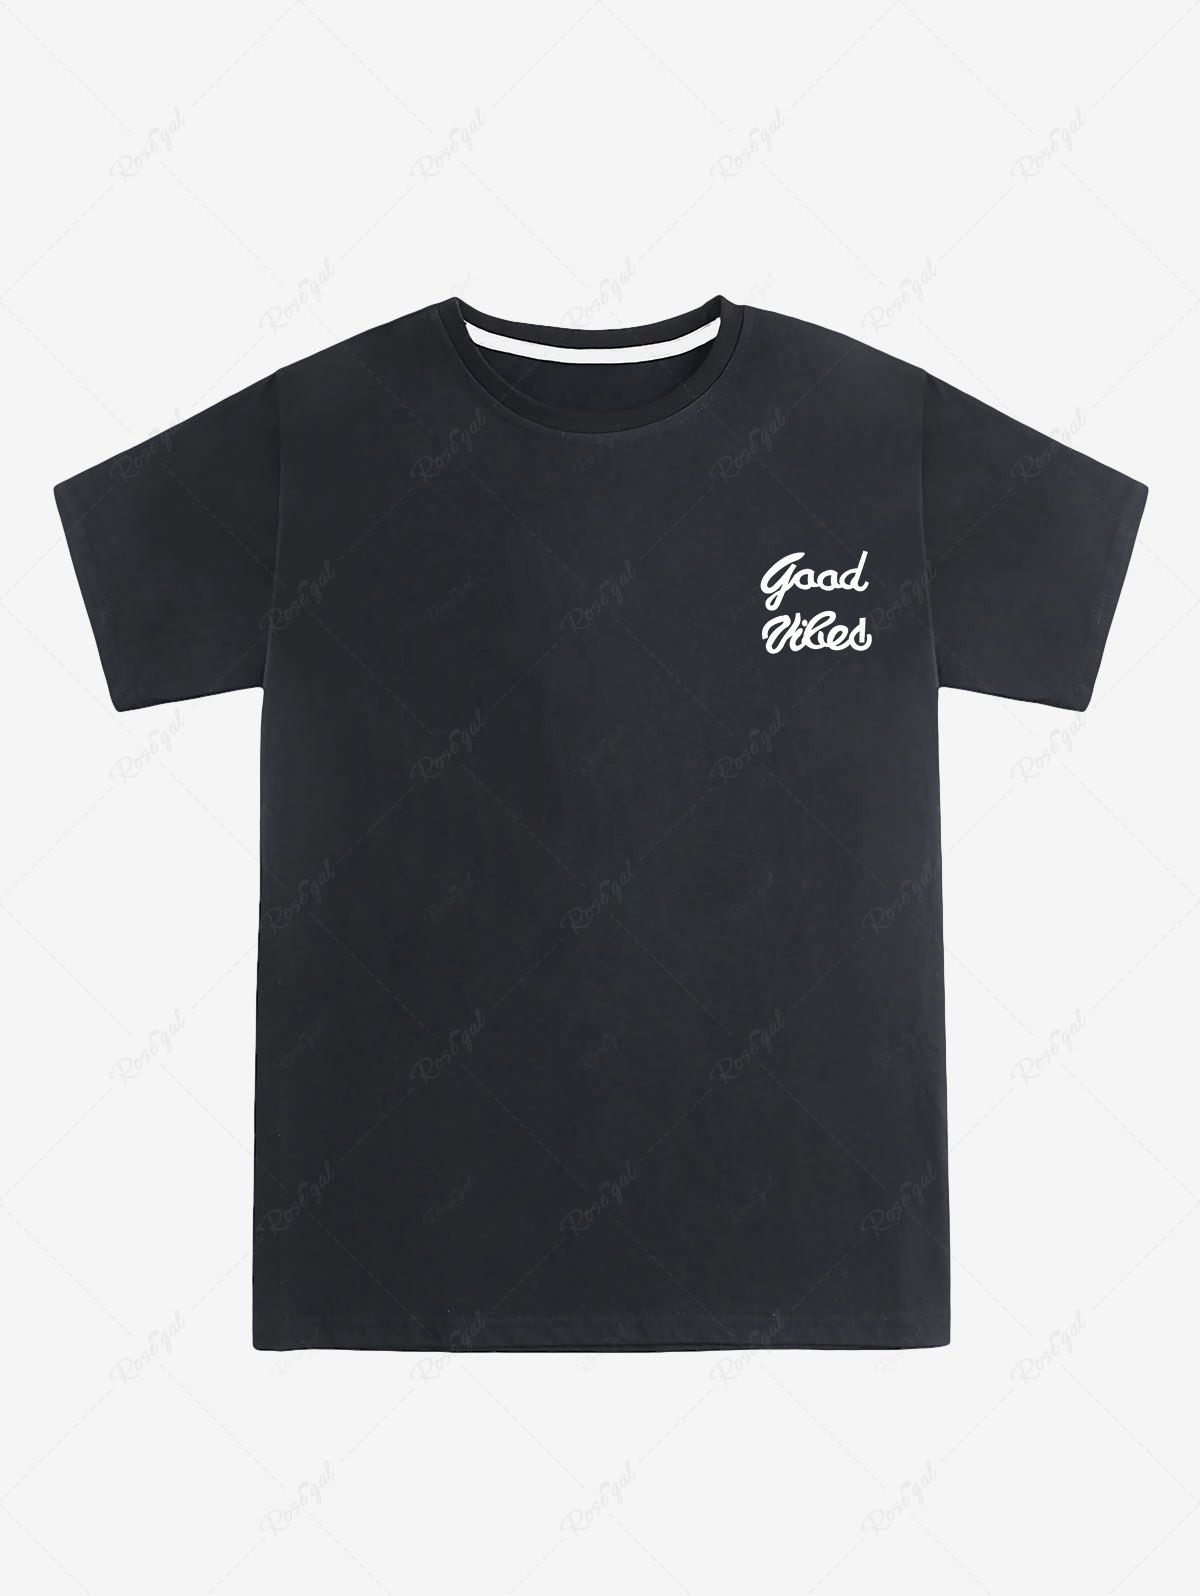 Buy Letters Printed Unisex Short Sleeves T Shirt  